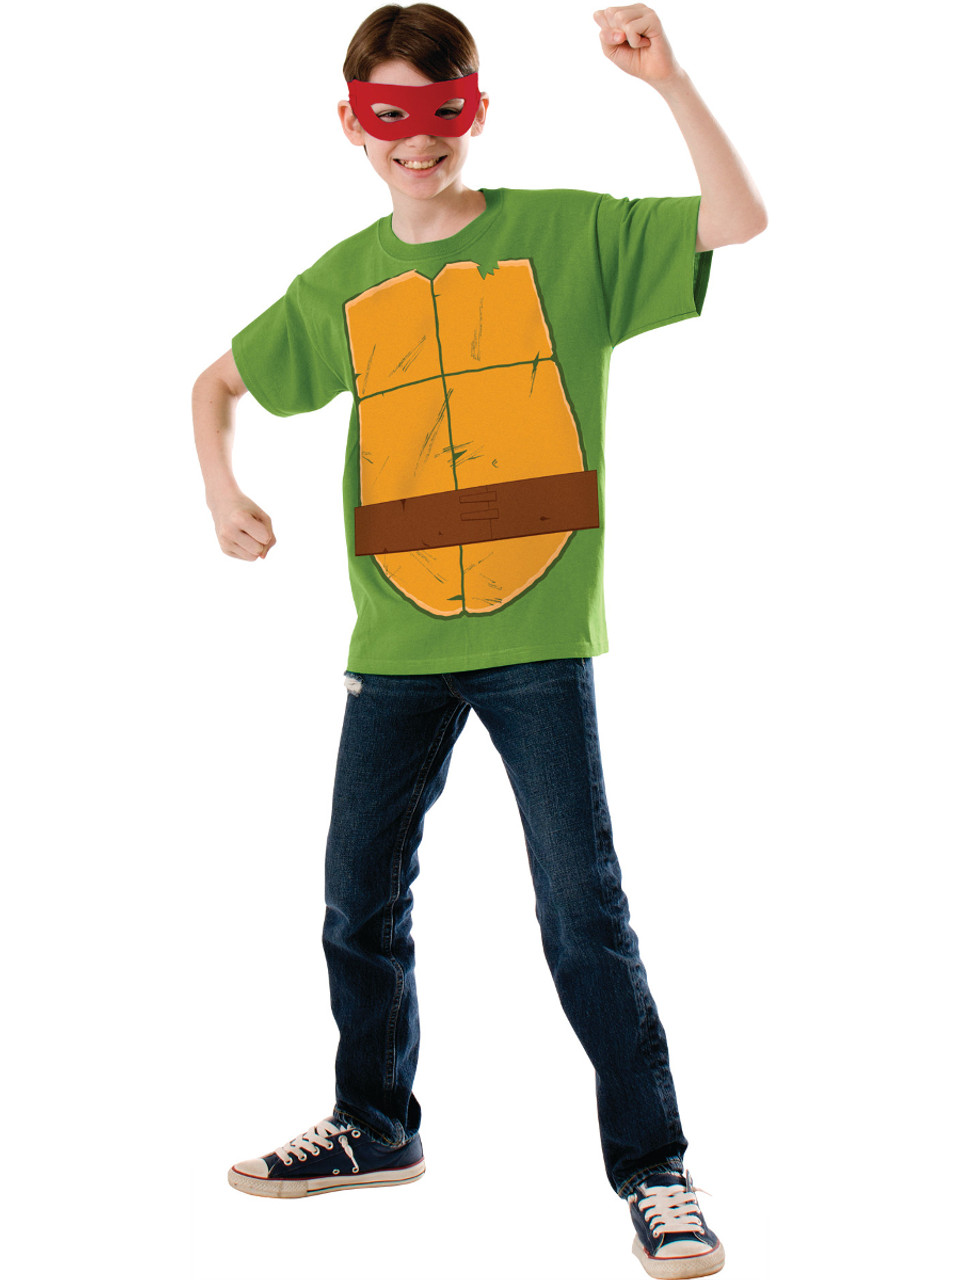 Raphael  Teenage mutant ninja turtles  Kids T-Shirt for Sale by